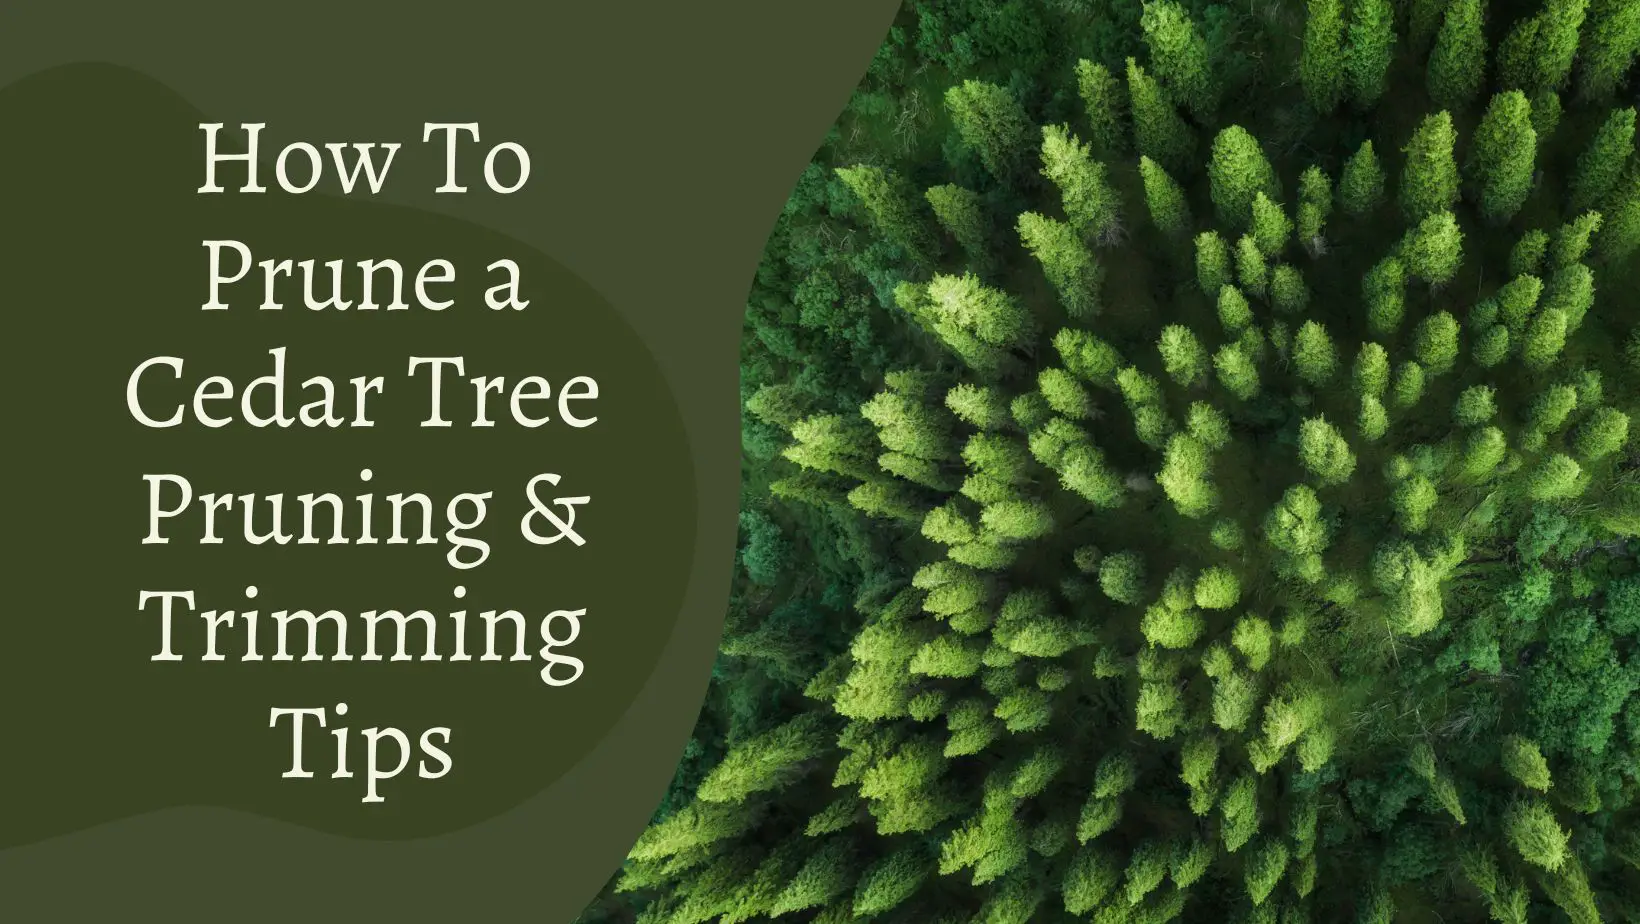 How To Prune a Cedar Tree